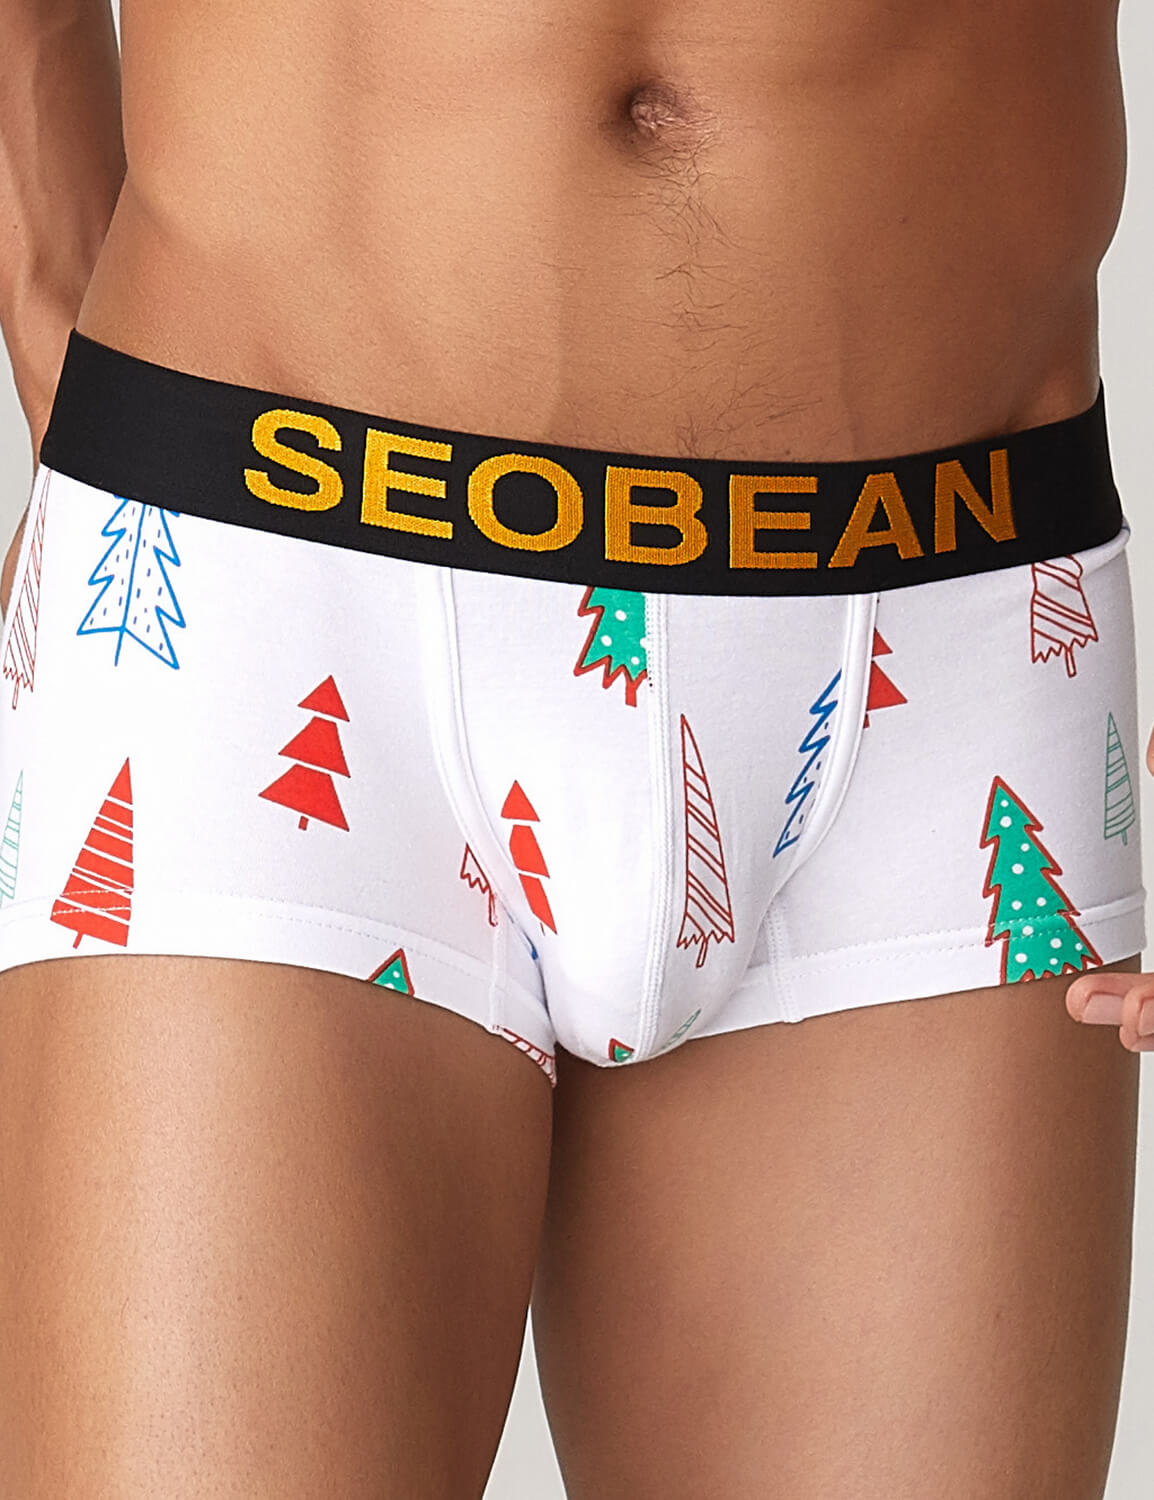 Seobean New Men's Underwear Christmas Print Low-waist Shorts